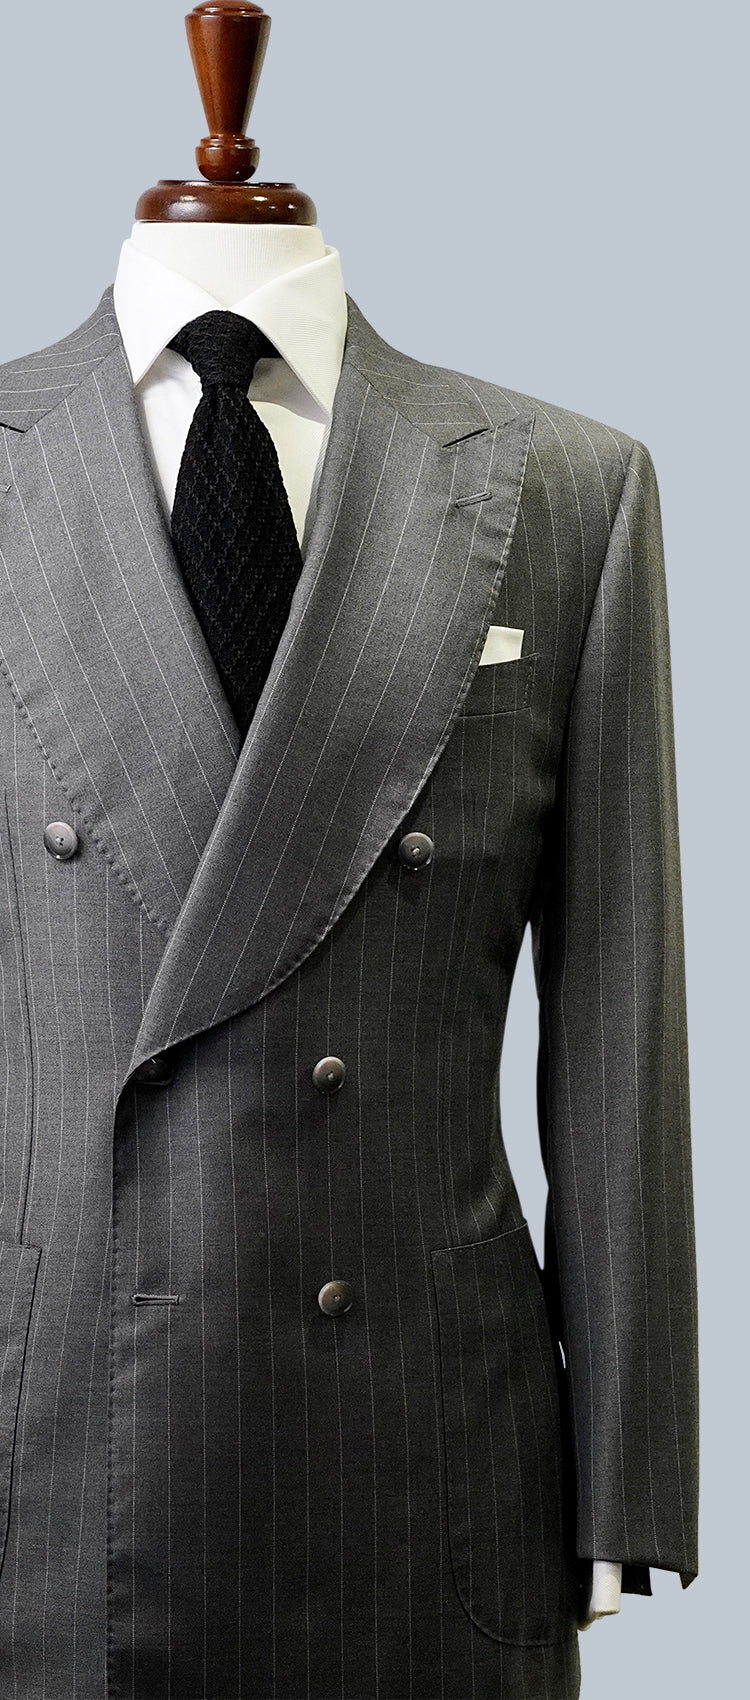 Steel Grey Pinstripe Suit